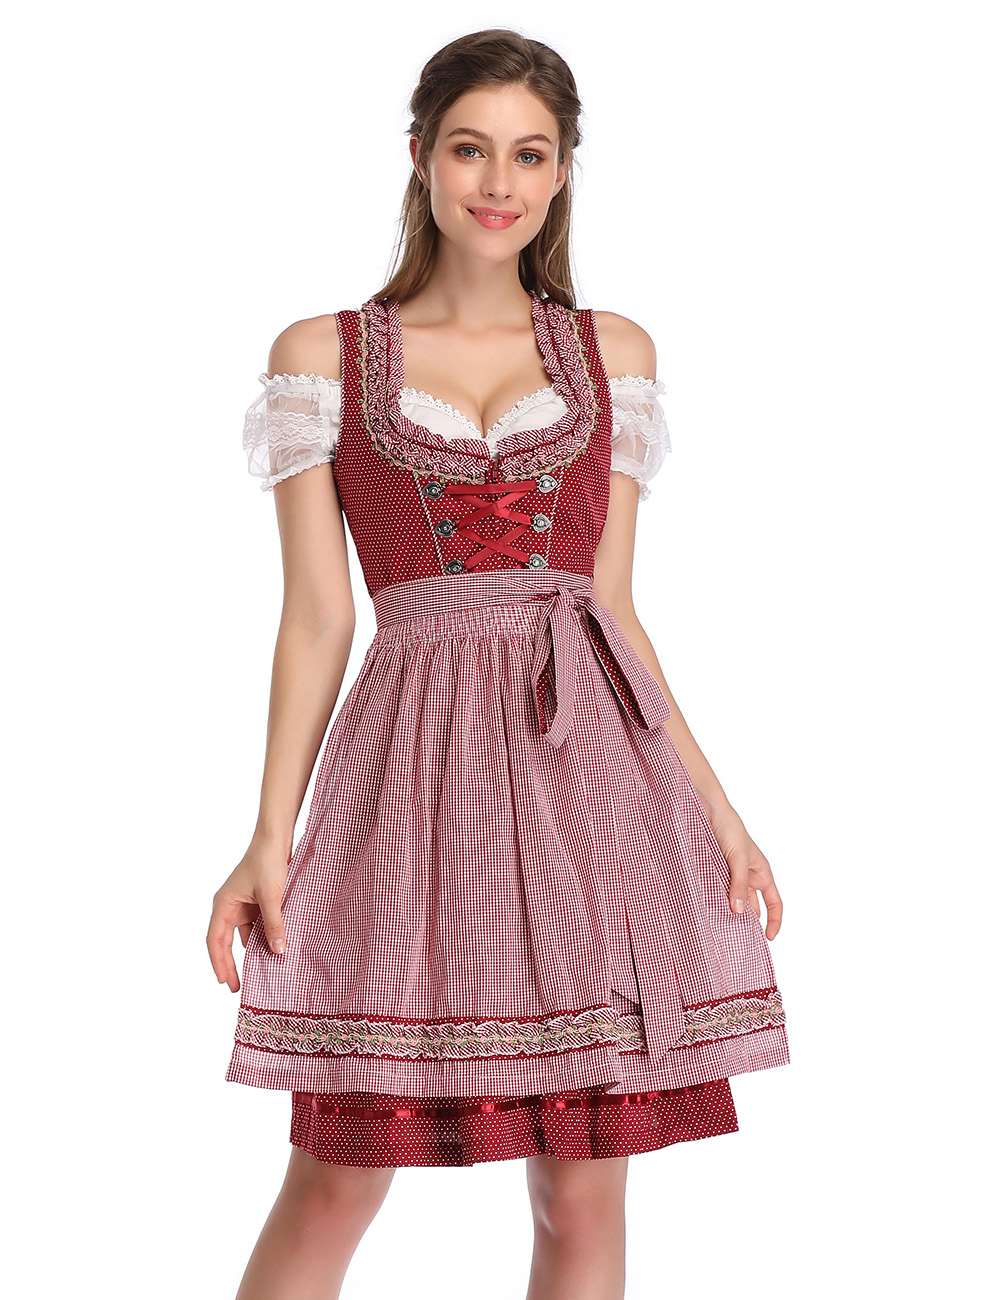 EU KOJOOIN Women's Vintage 3-Piece Oktoberfest Embroidery Dirndl Dress Burgundy Polka Dot 34